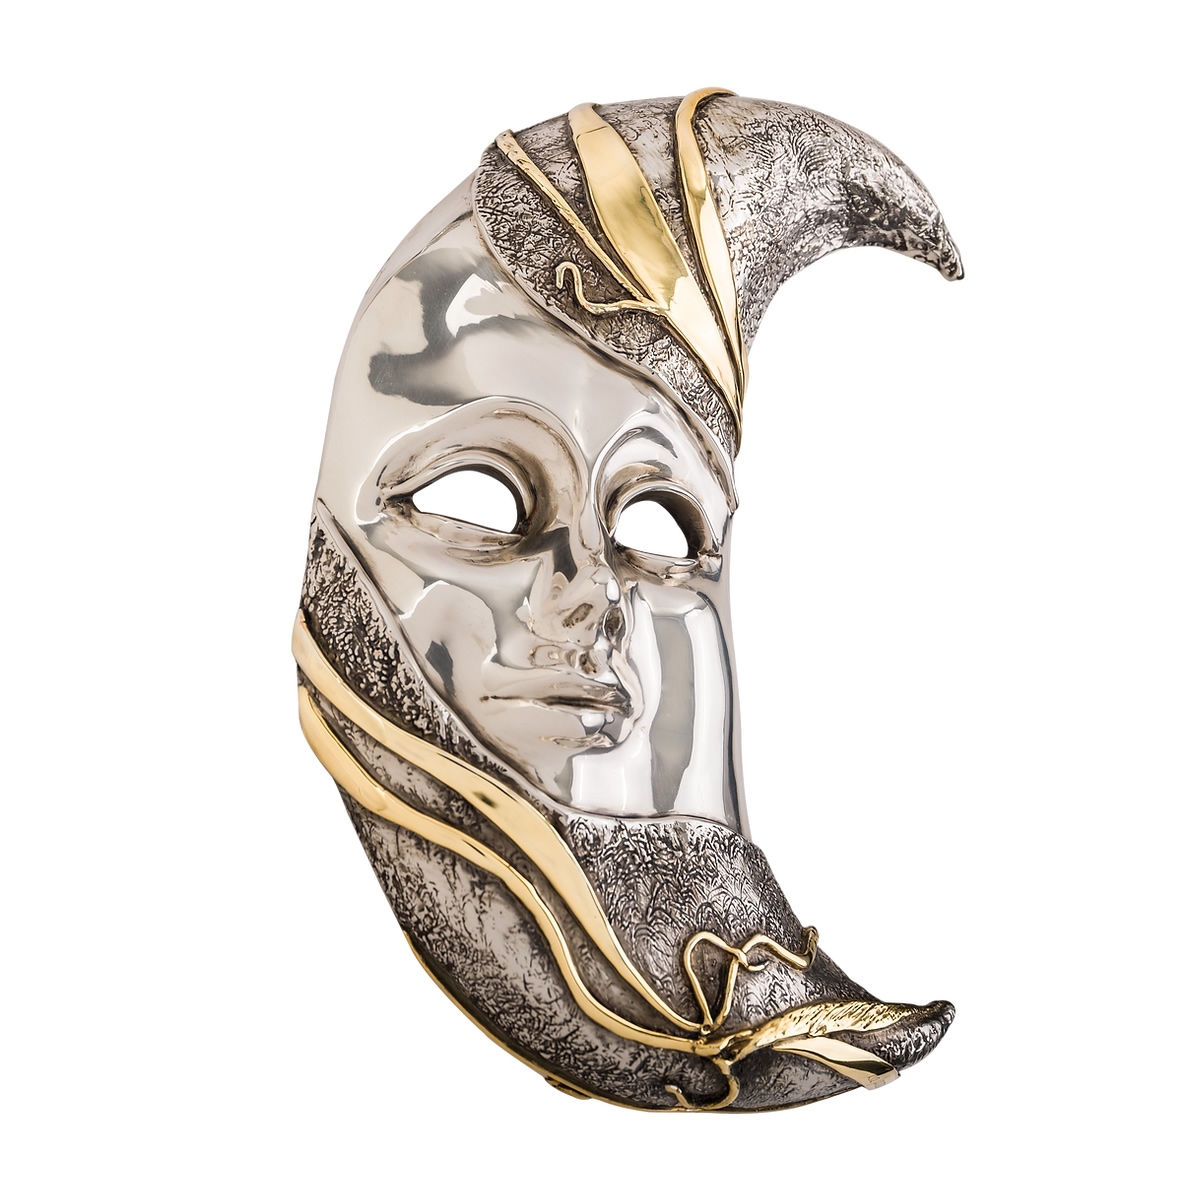 Silver Moon Mask Wall Sculpture